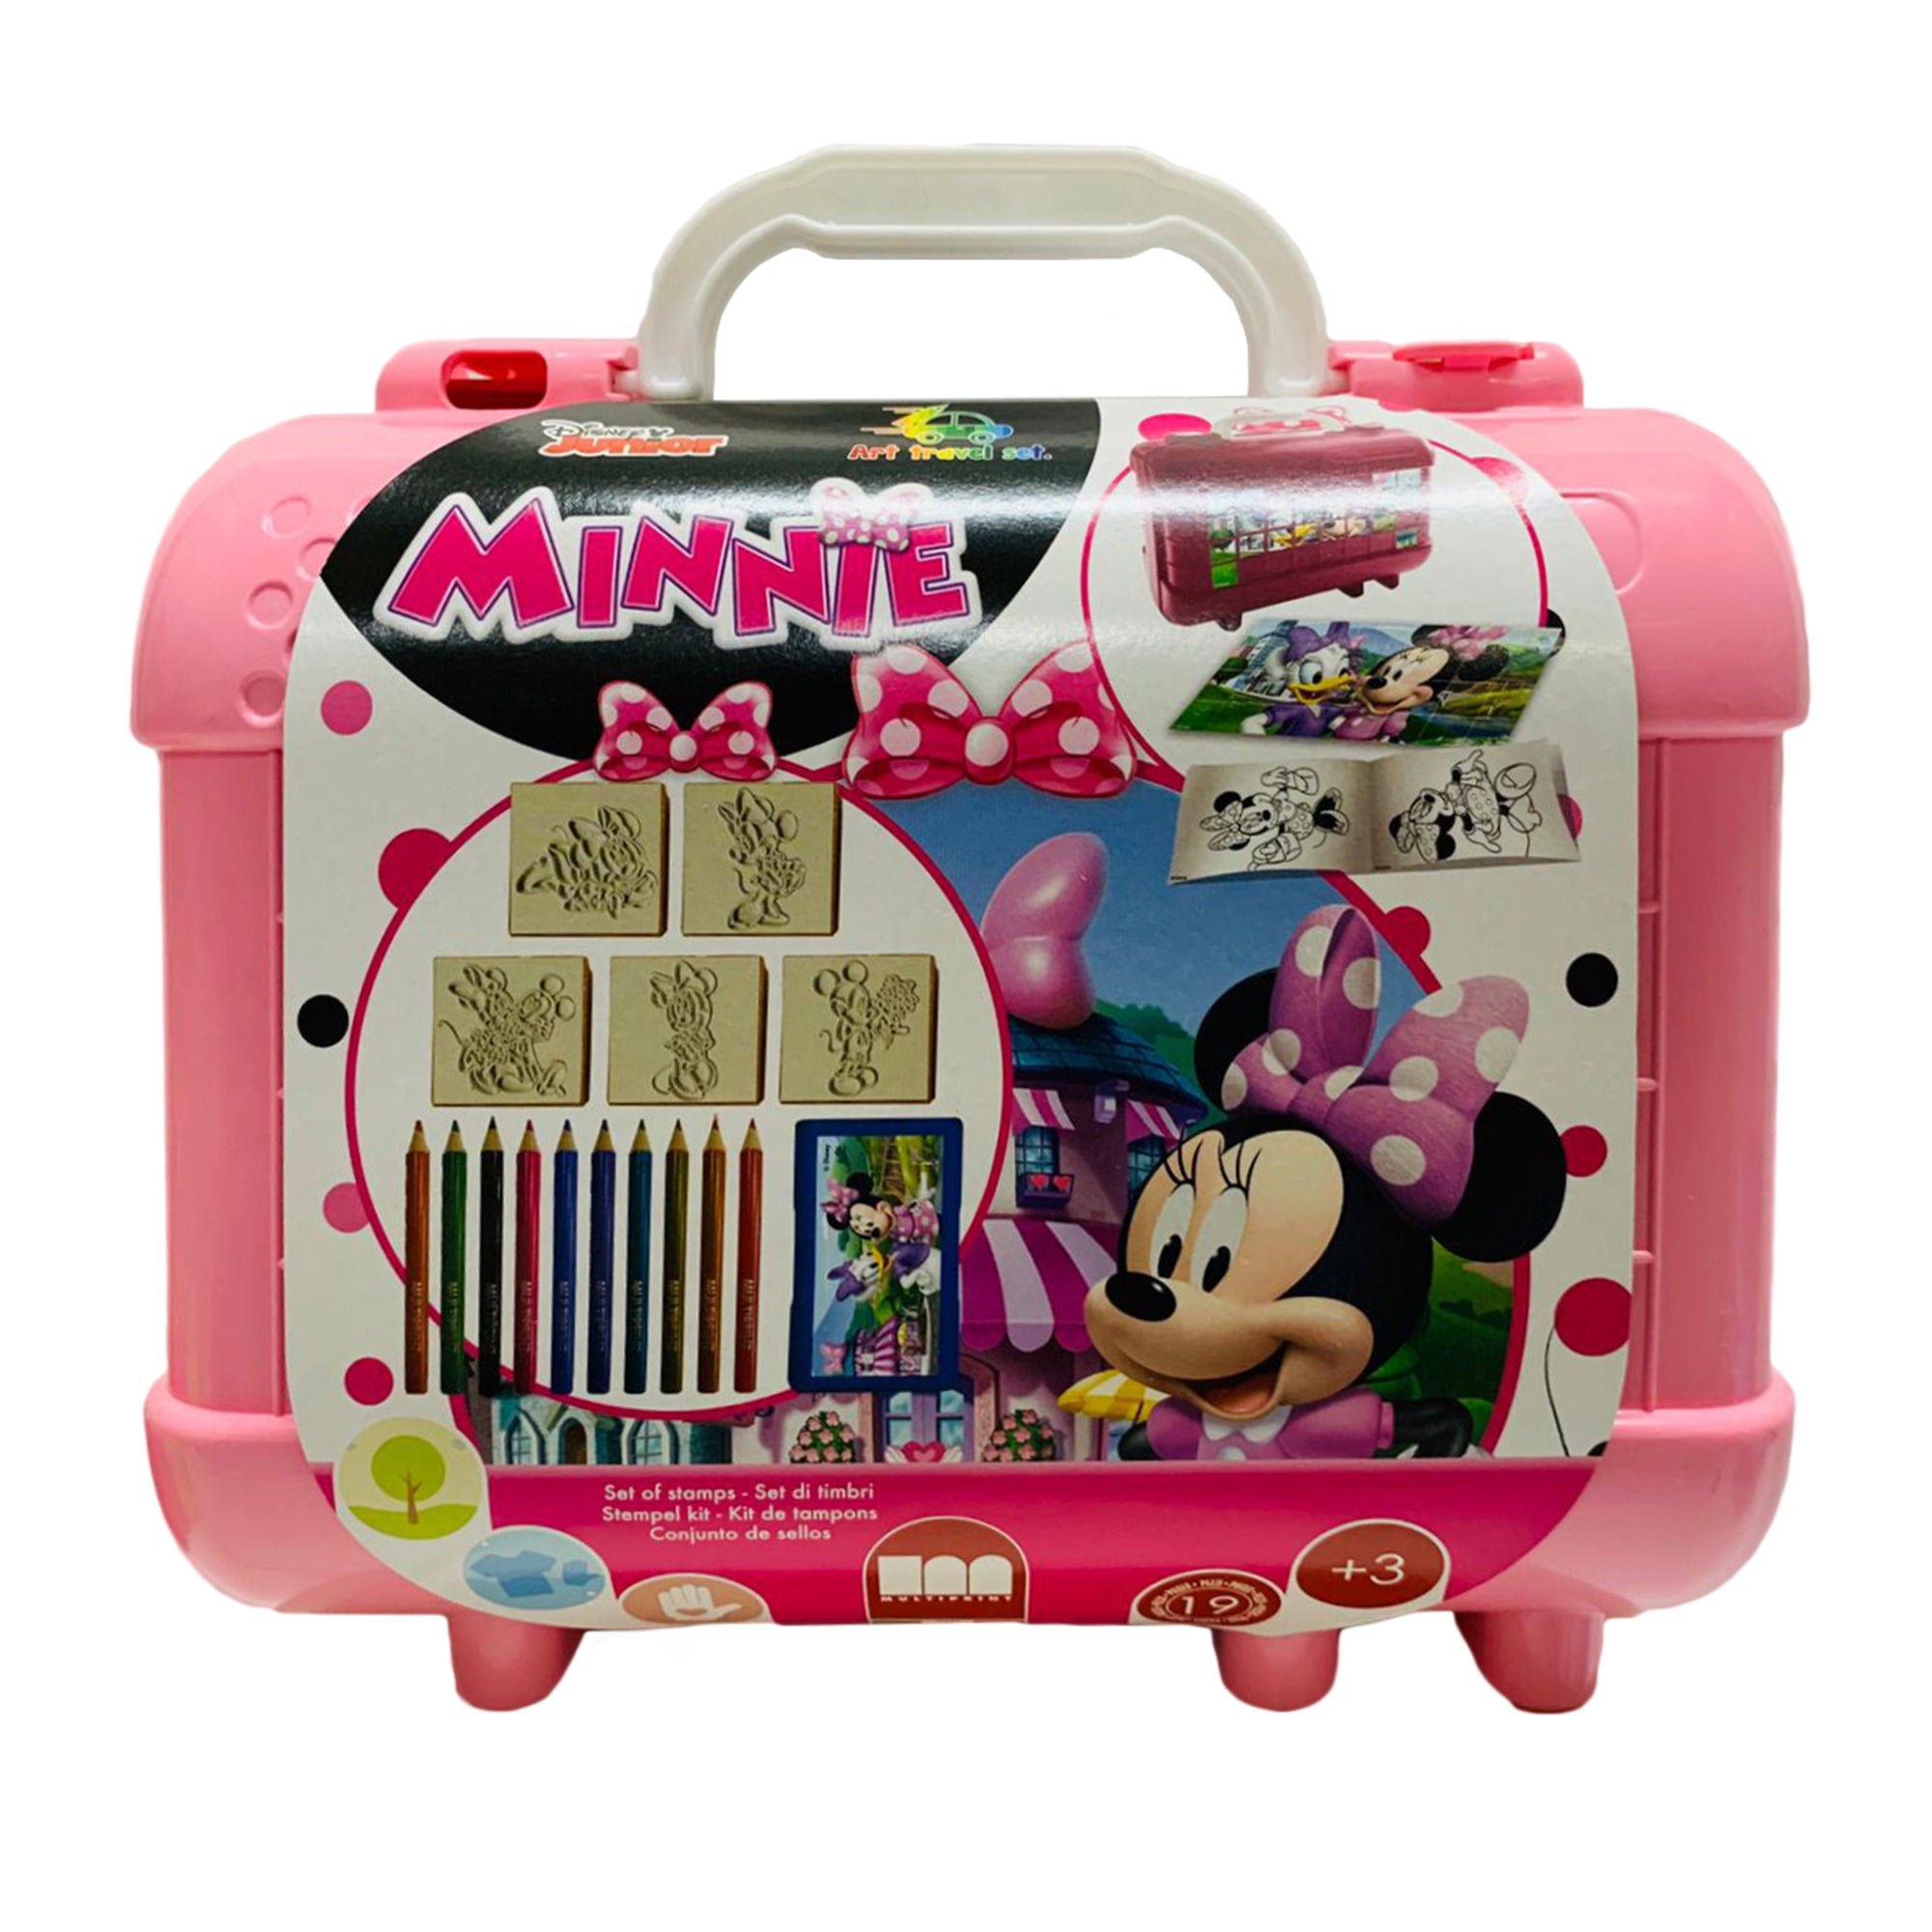 Set cancelleria valigetta ufficiale Disney Minnie con timbri bimbi 2653